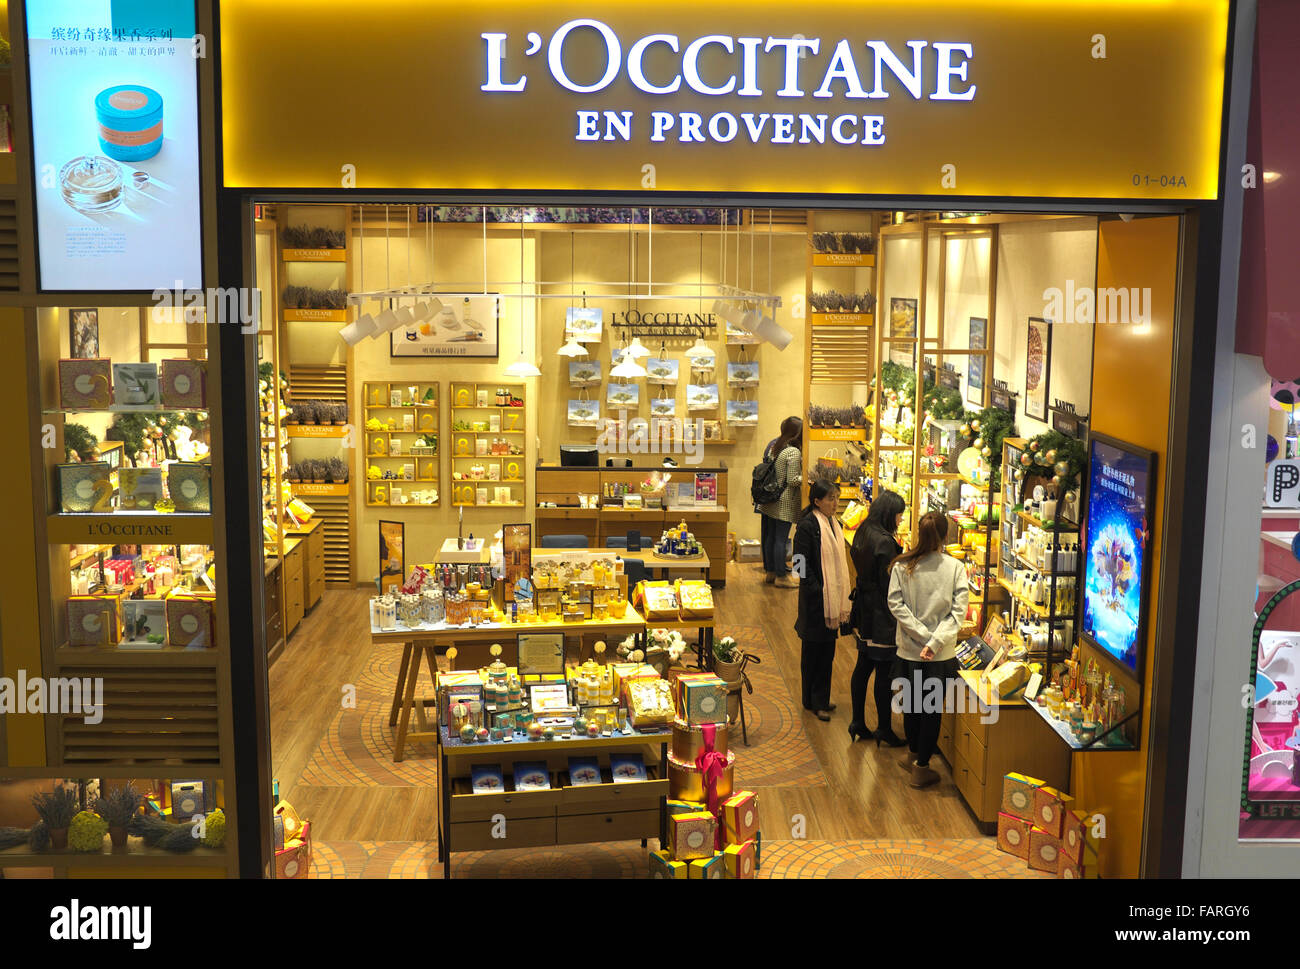 L'Occitane en store in China Stock Photo - Alamy